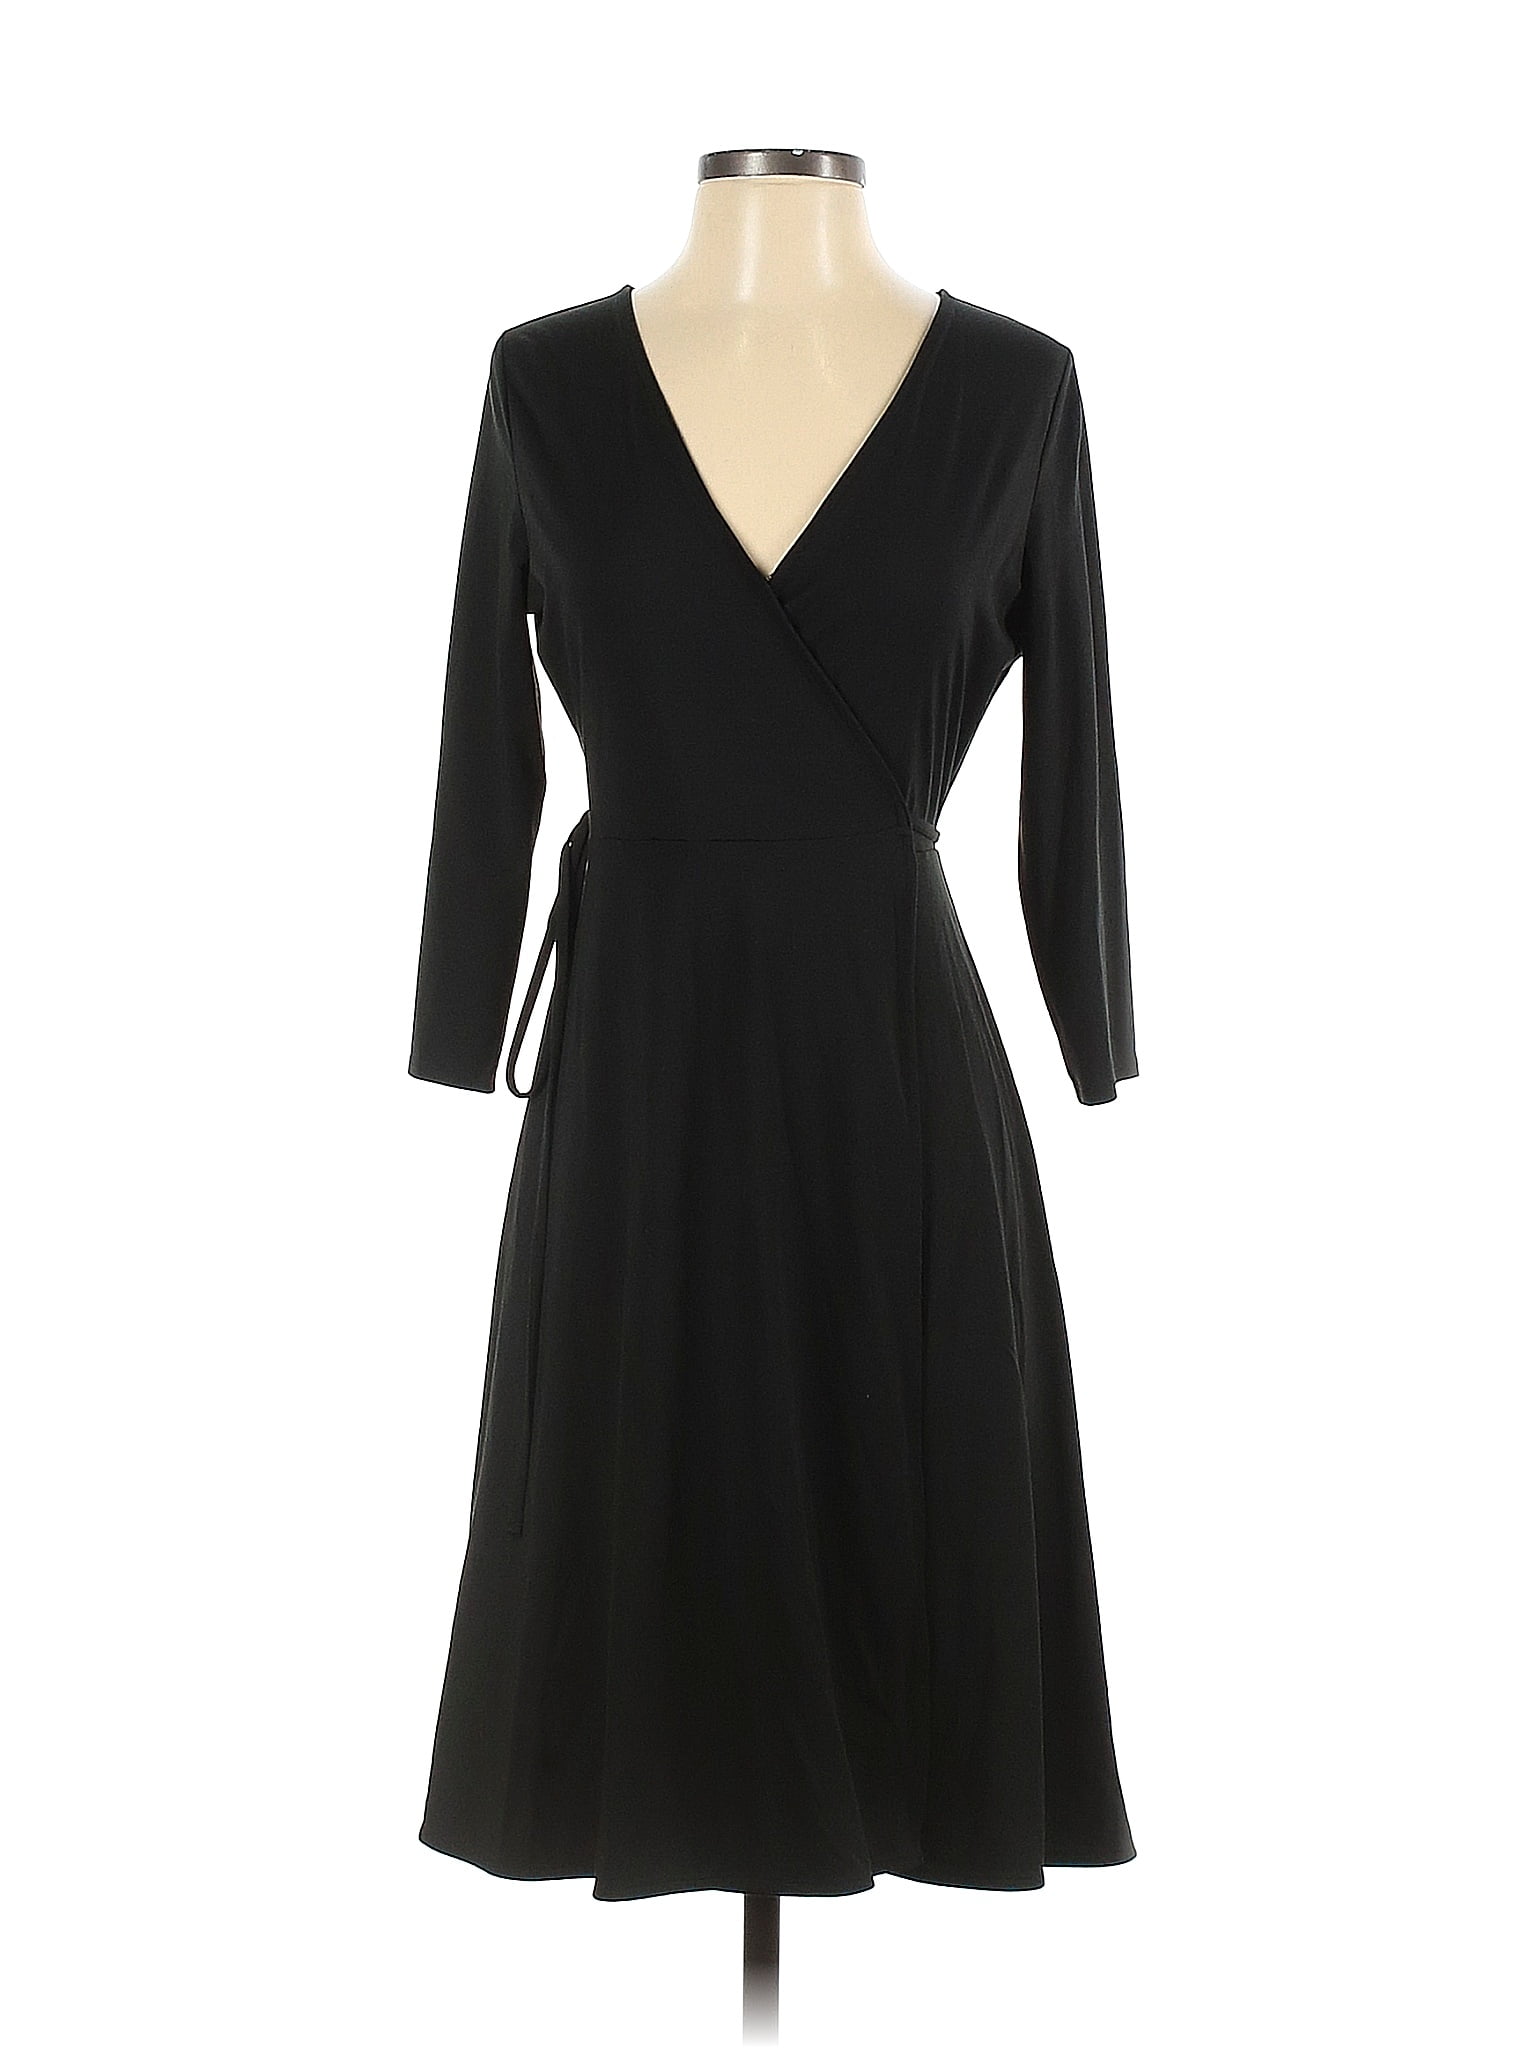 Banana Republic Solid Black Casual Dress Size S (Petite) - 66% off ...